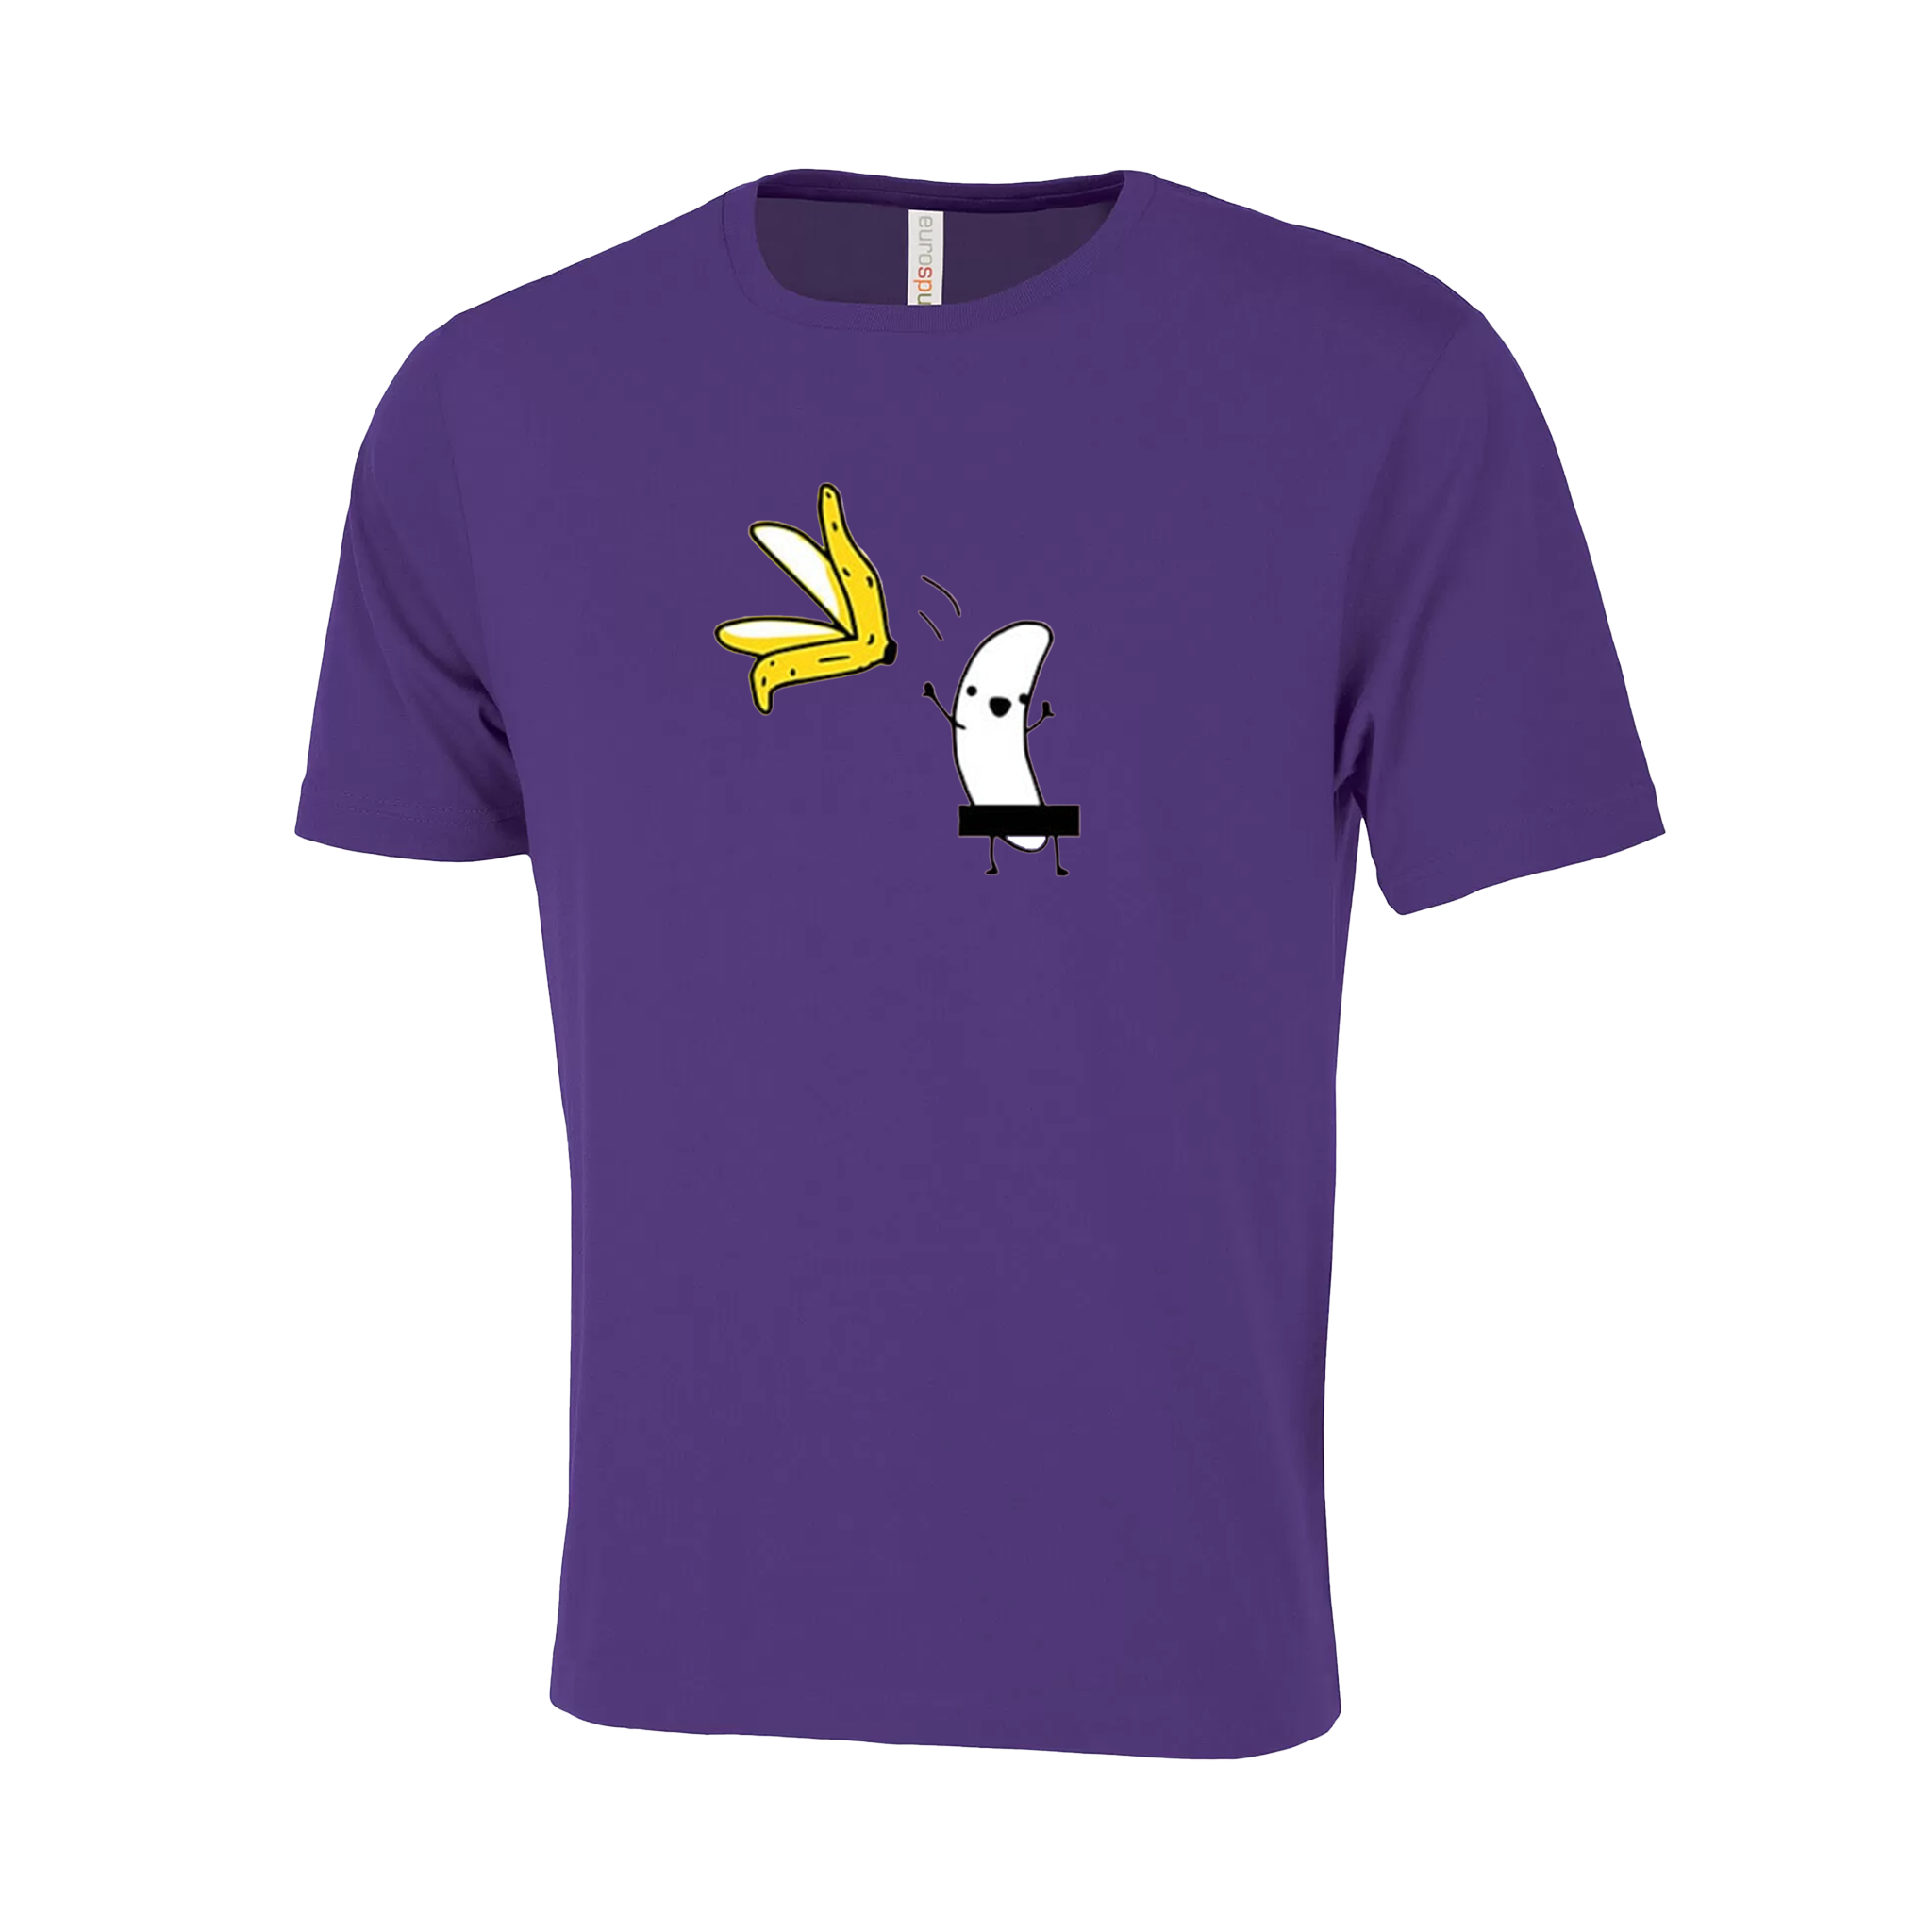 Stripped Banana Novelty T-Shirt - Adult Unisex Sizing XS-4XL - Purple